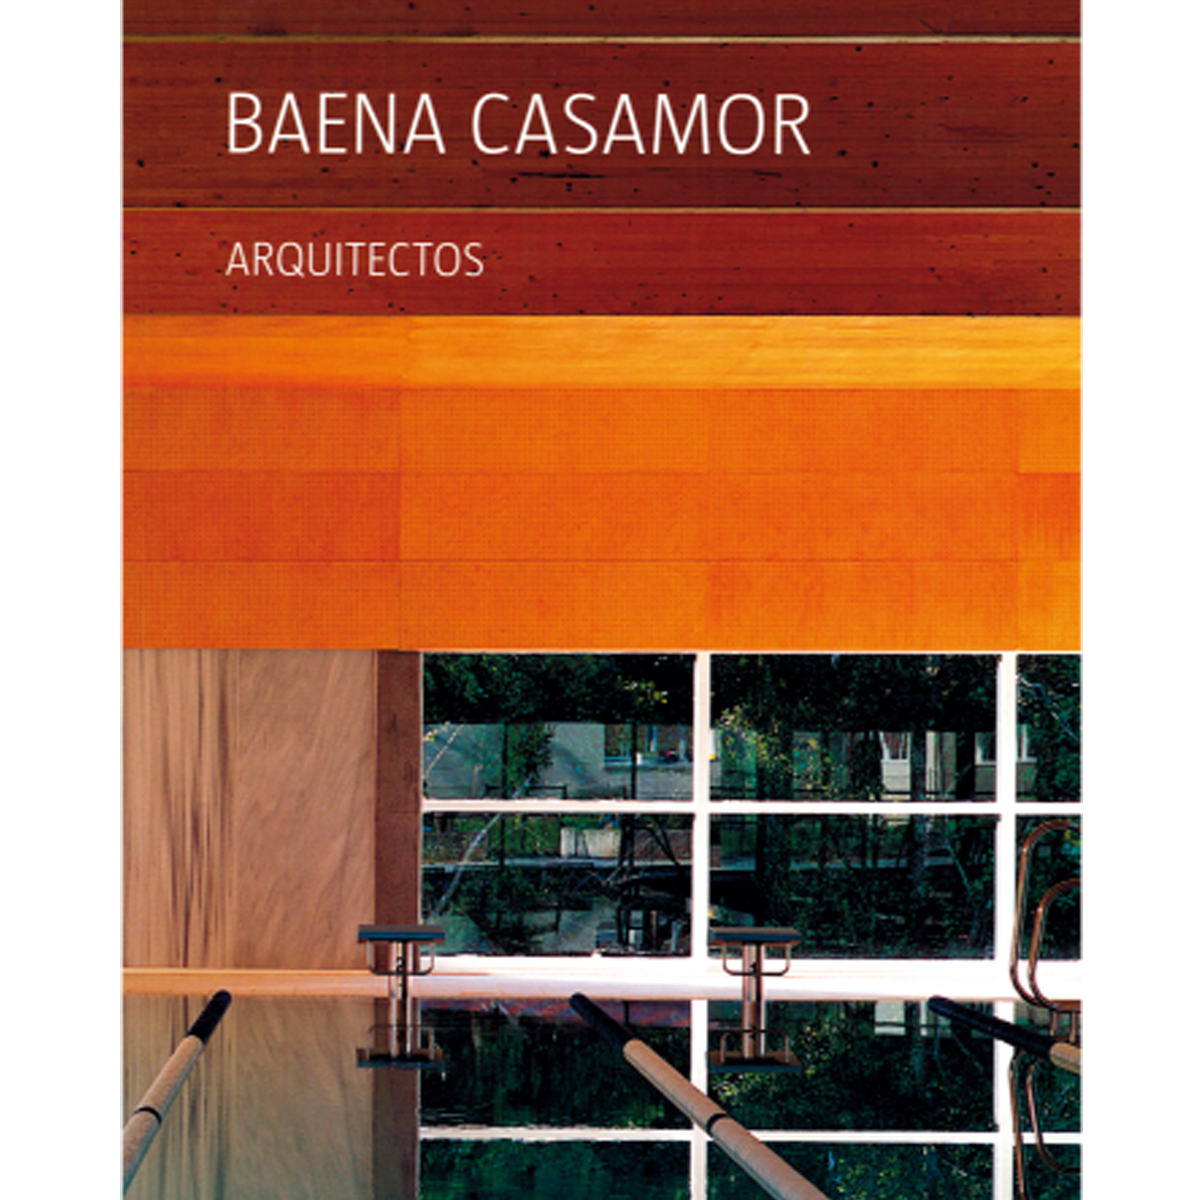 Baena Casamor arquitectos